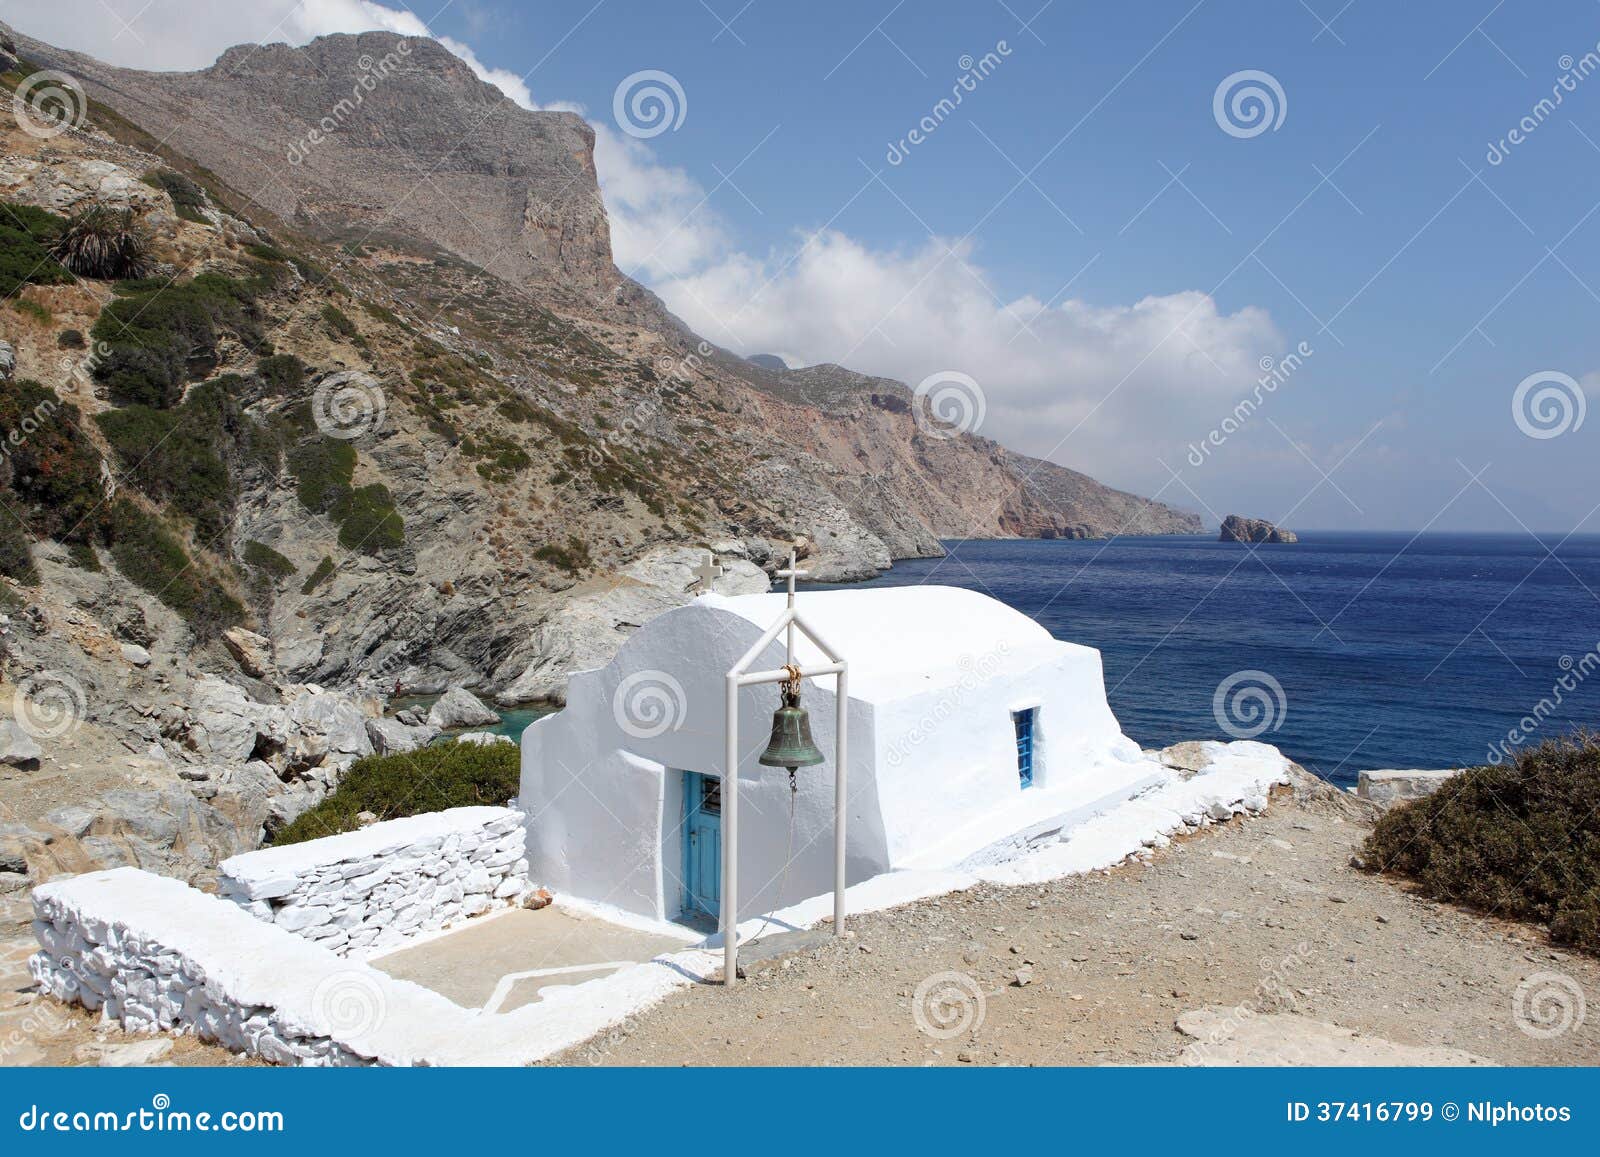 agia anna on amorgos island,greece